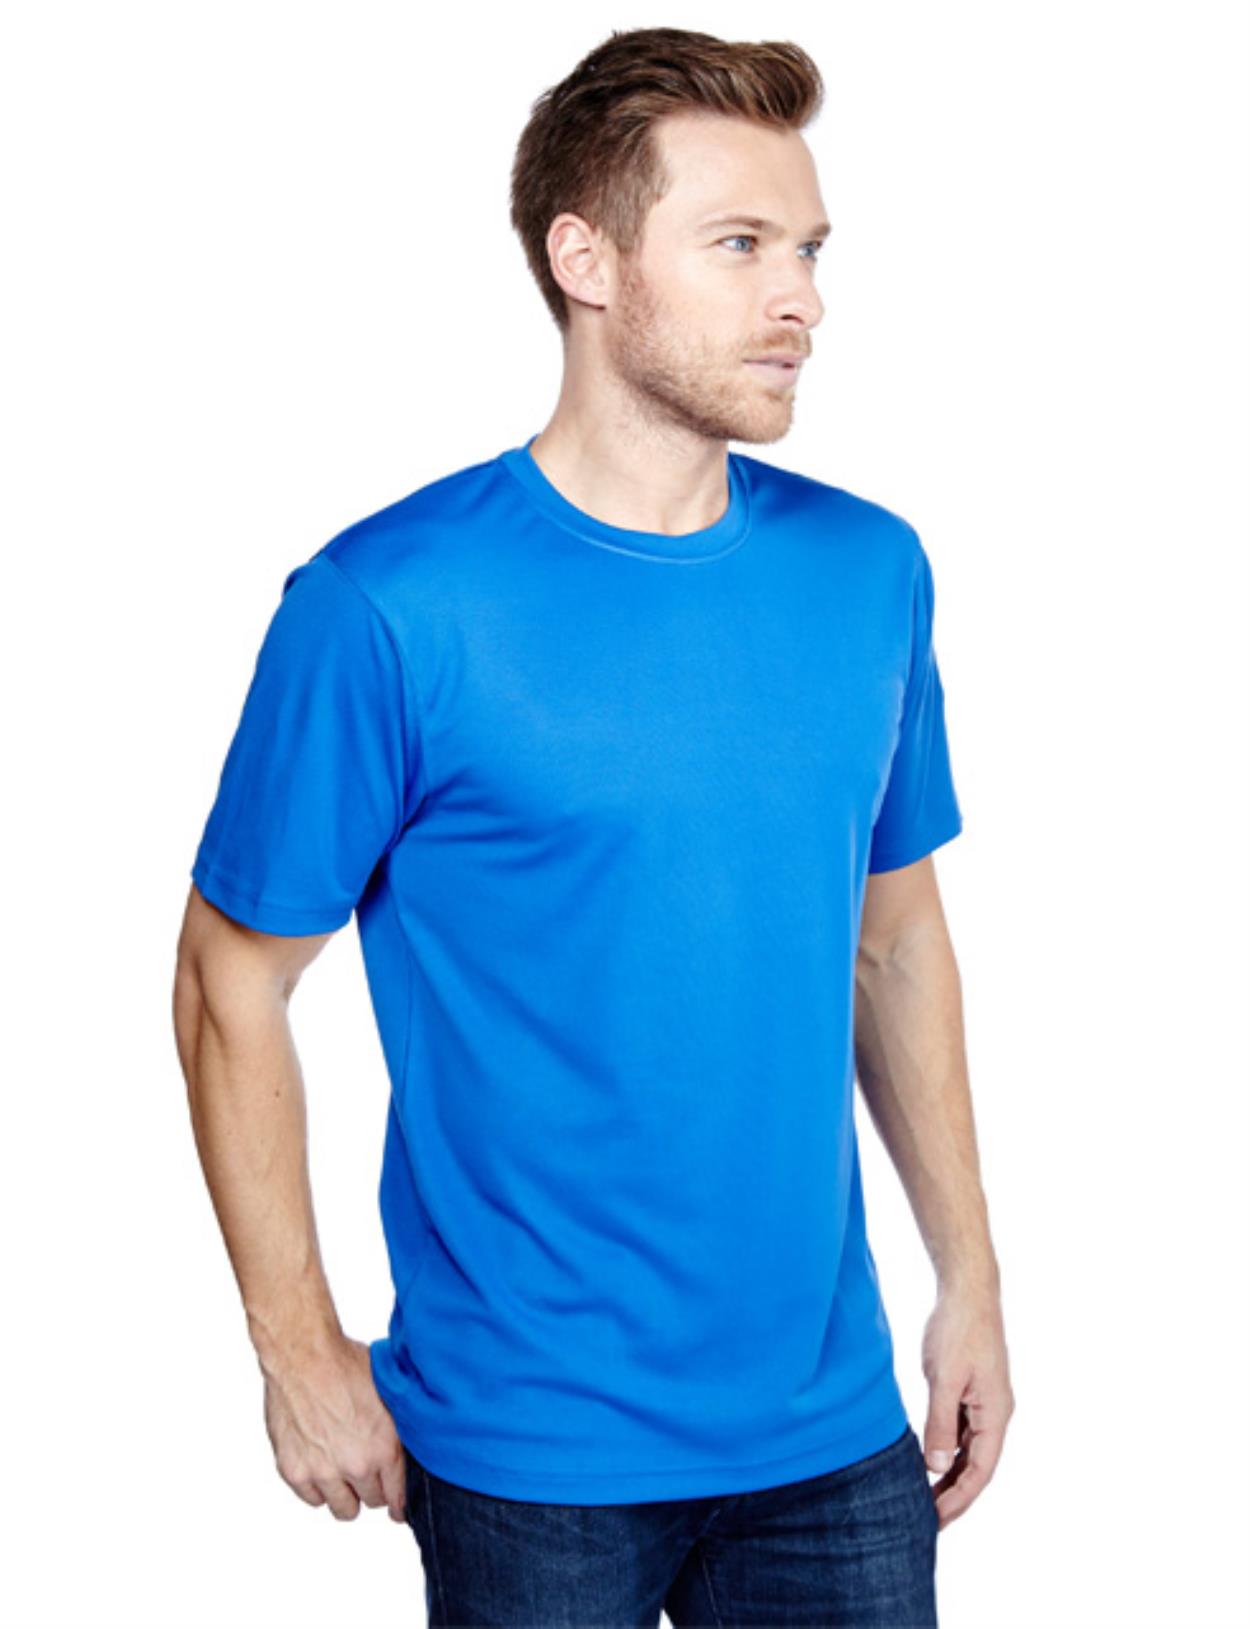 UC315 - Mens Sports T shirt